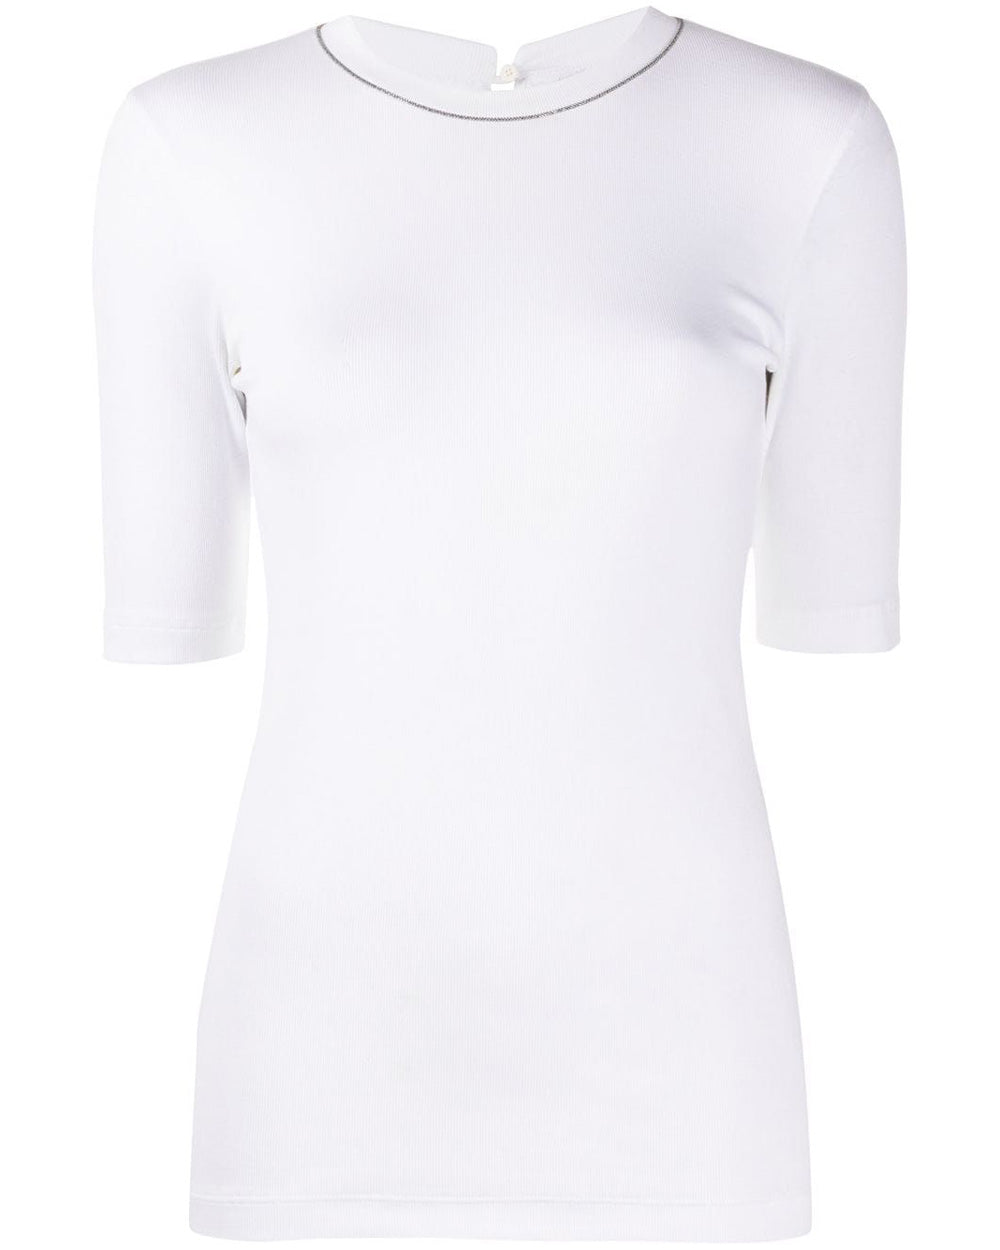 White Monili Neck Short Sleeve T-Shirt